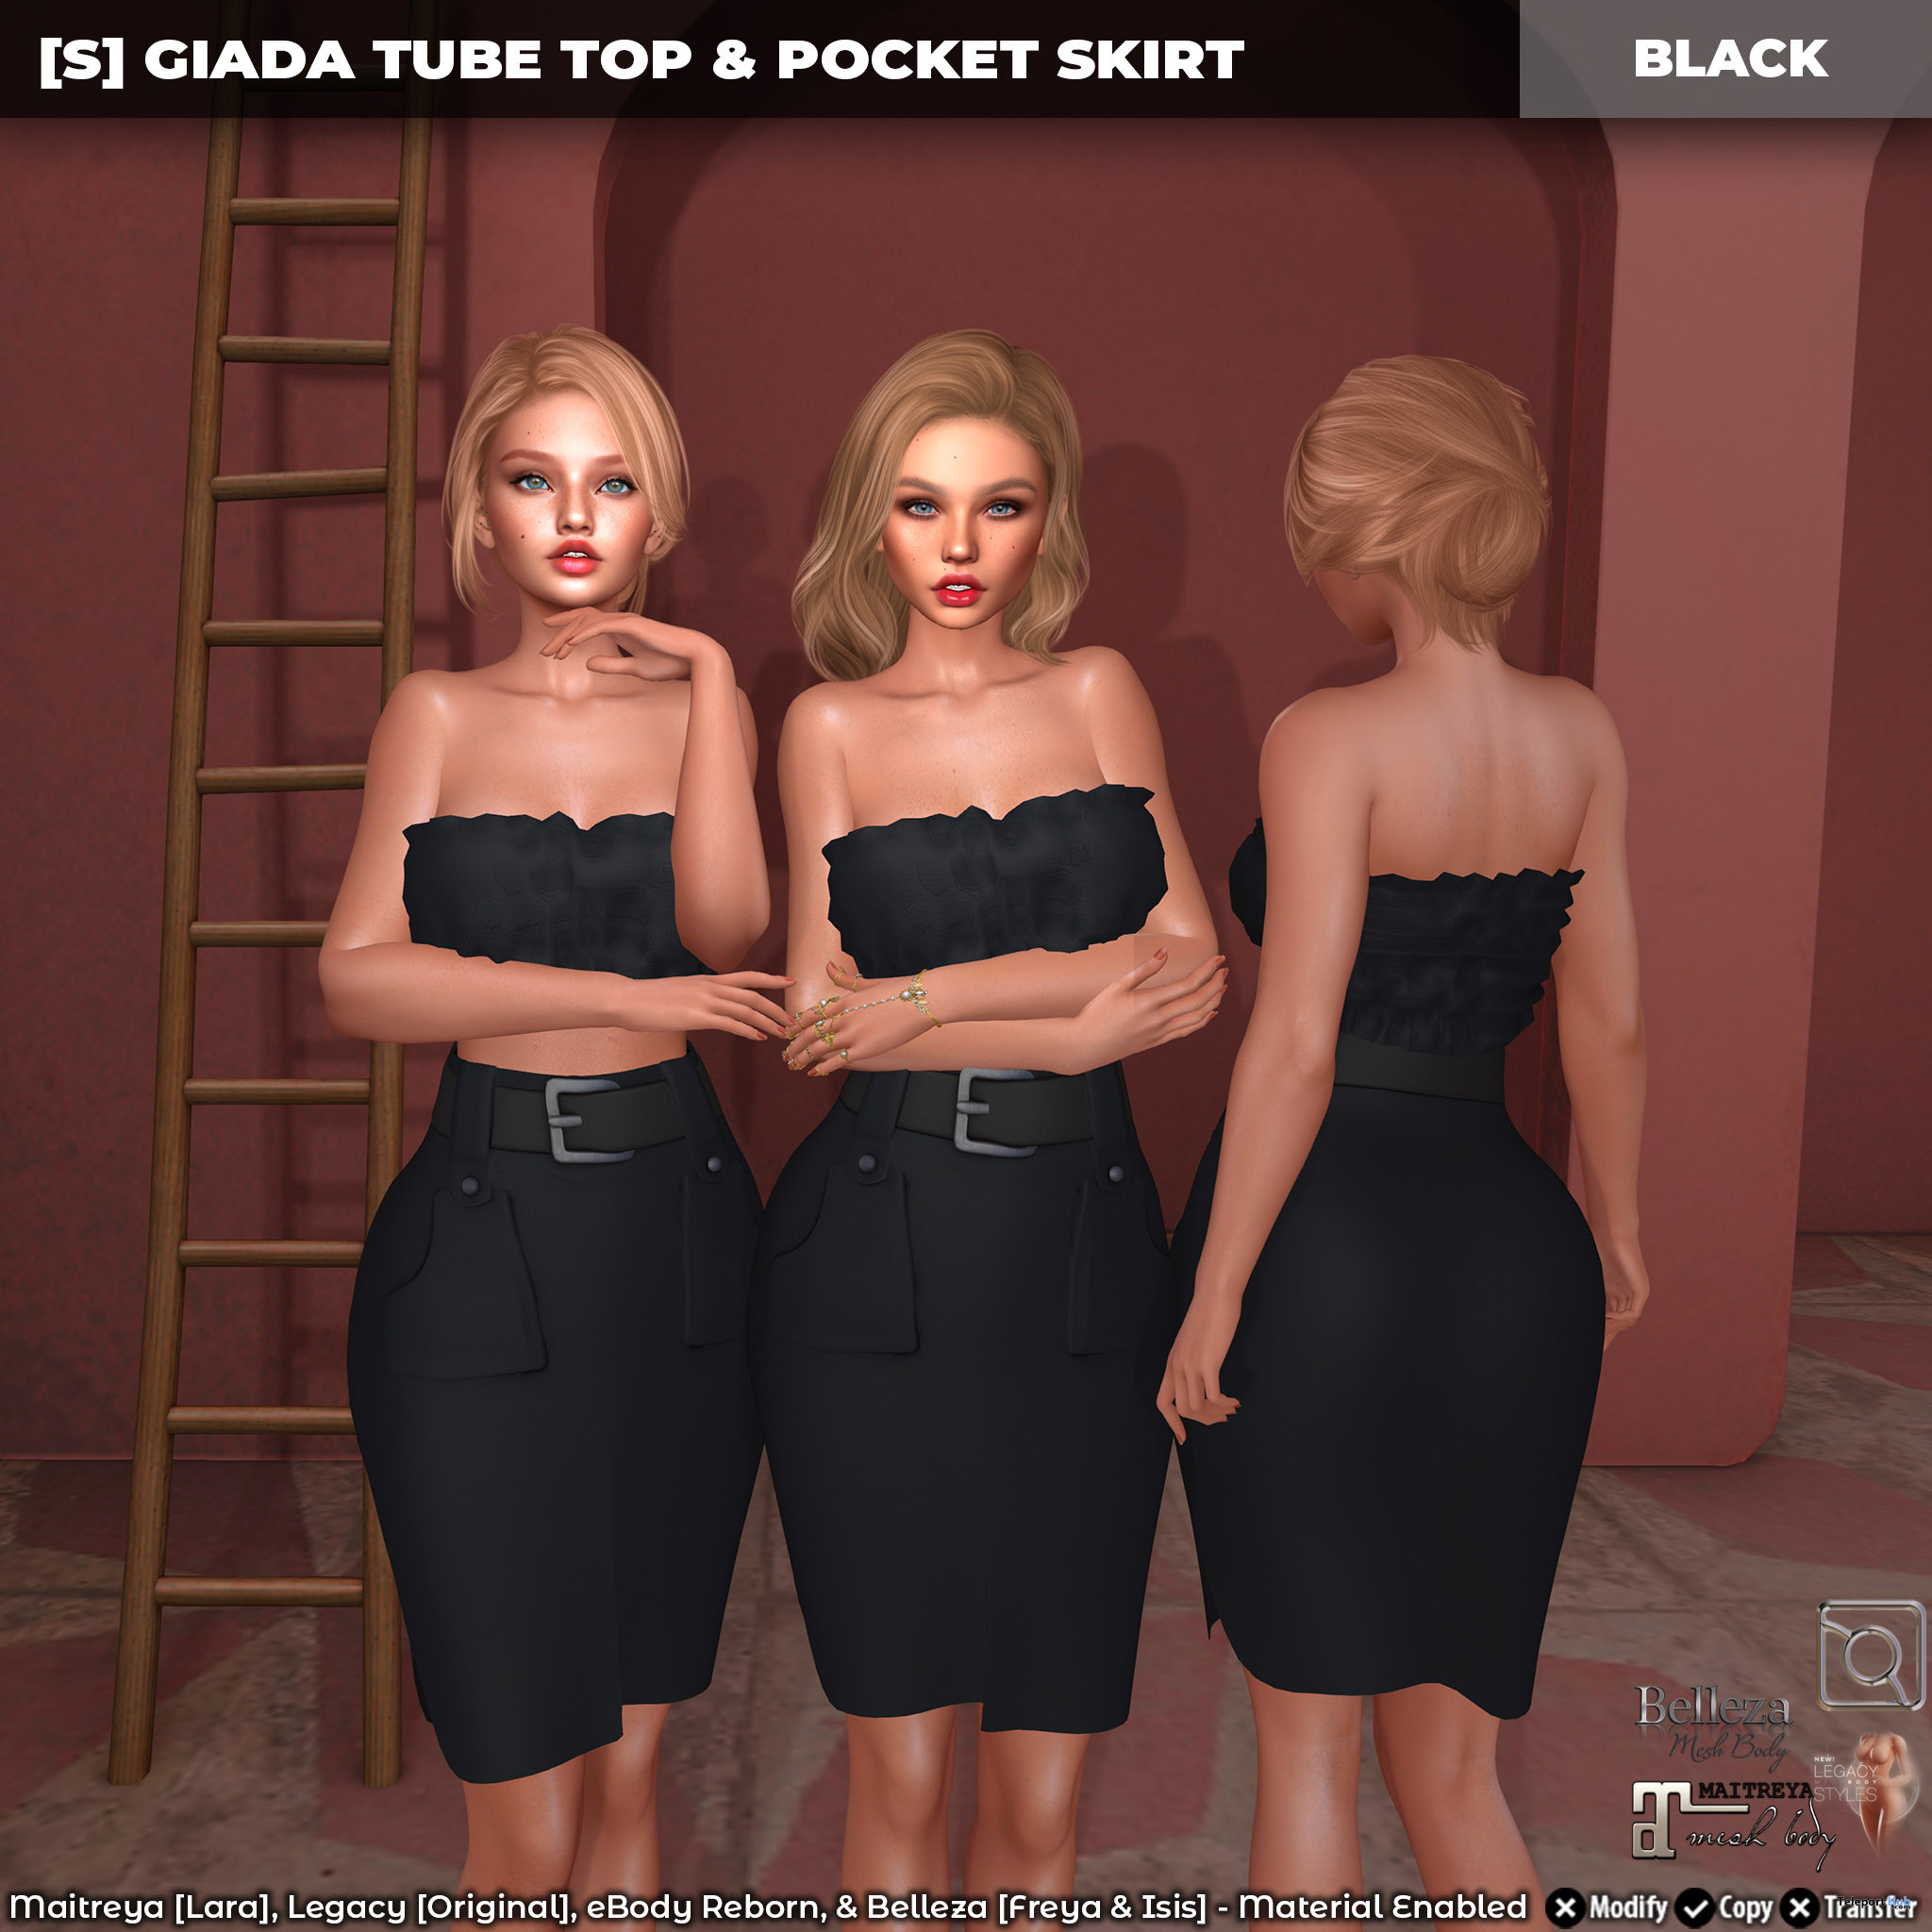 New Release: [S] Giada Tube Top & Pocket Skirt by [satus Inc] - Teleport Hub - teleporthub.com